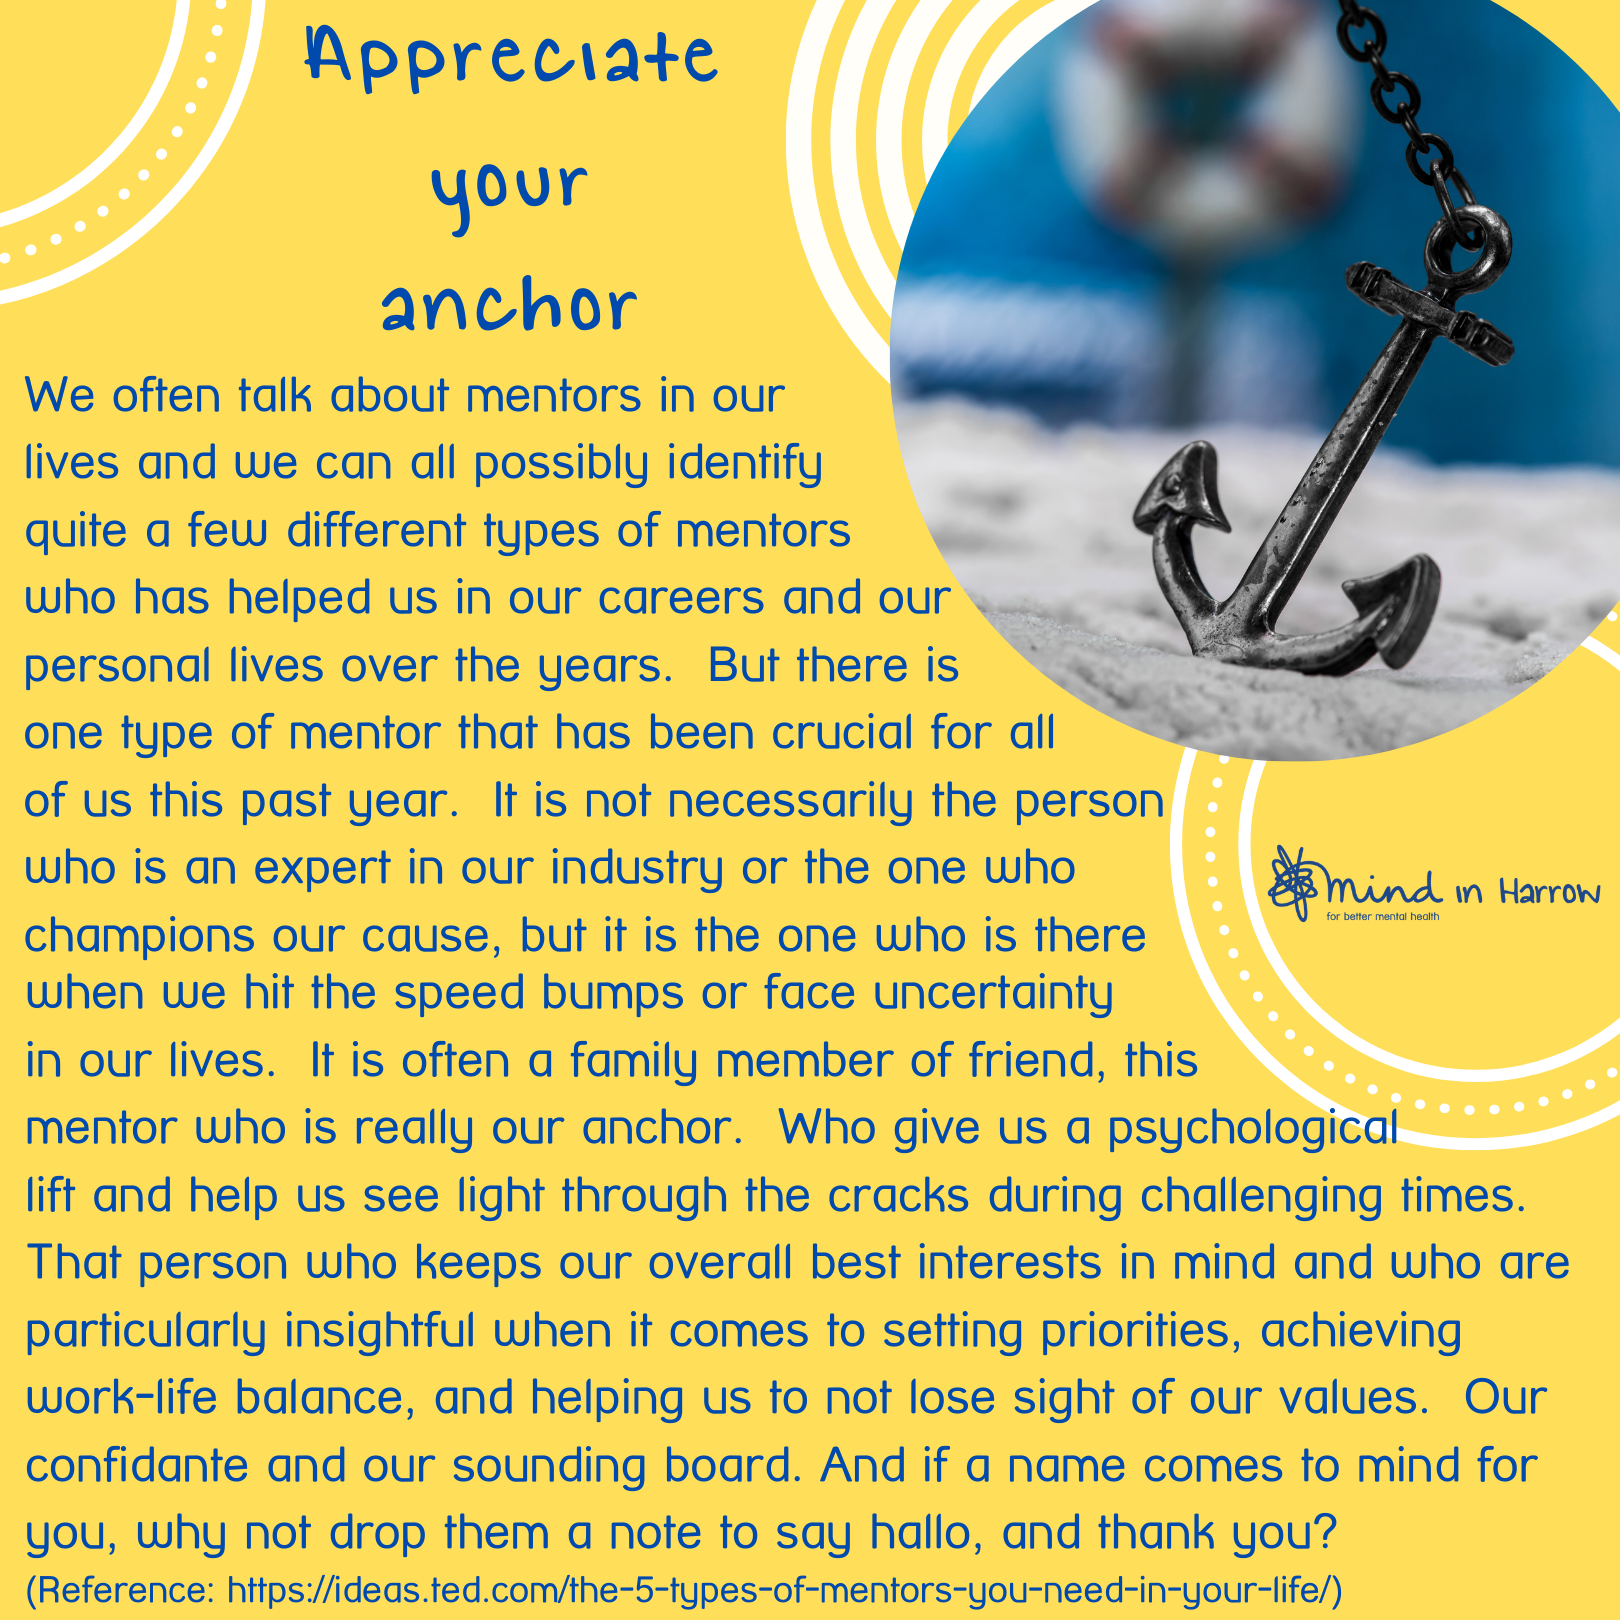 Appreciate your Anchor